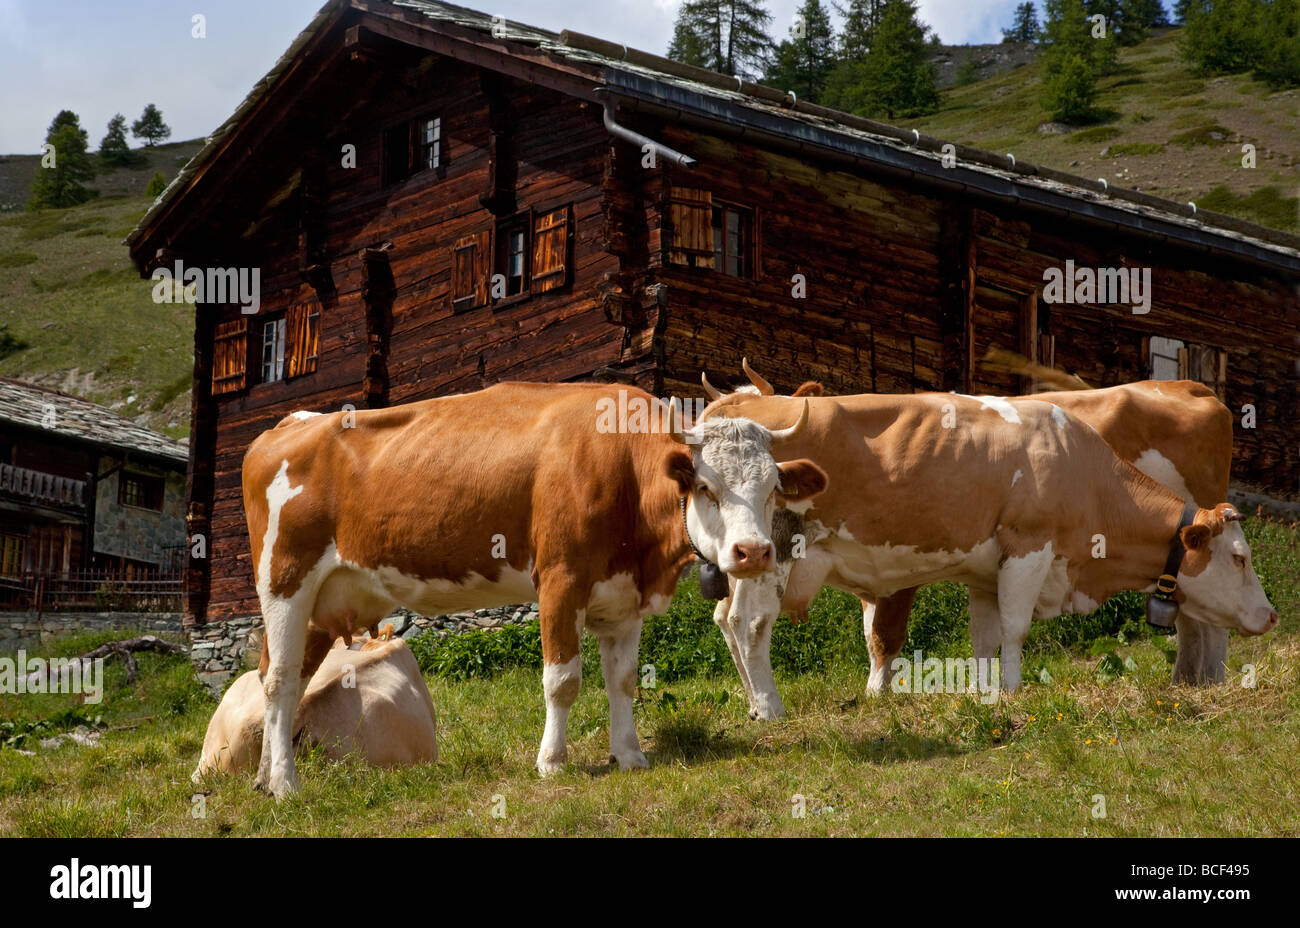 Cows with bells next to swiss wooden house on hillside, Zermatt, Switzerland, europe. Stock Photo